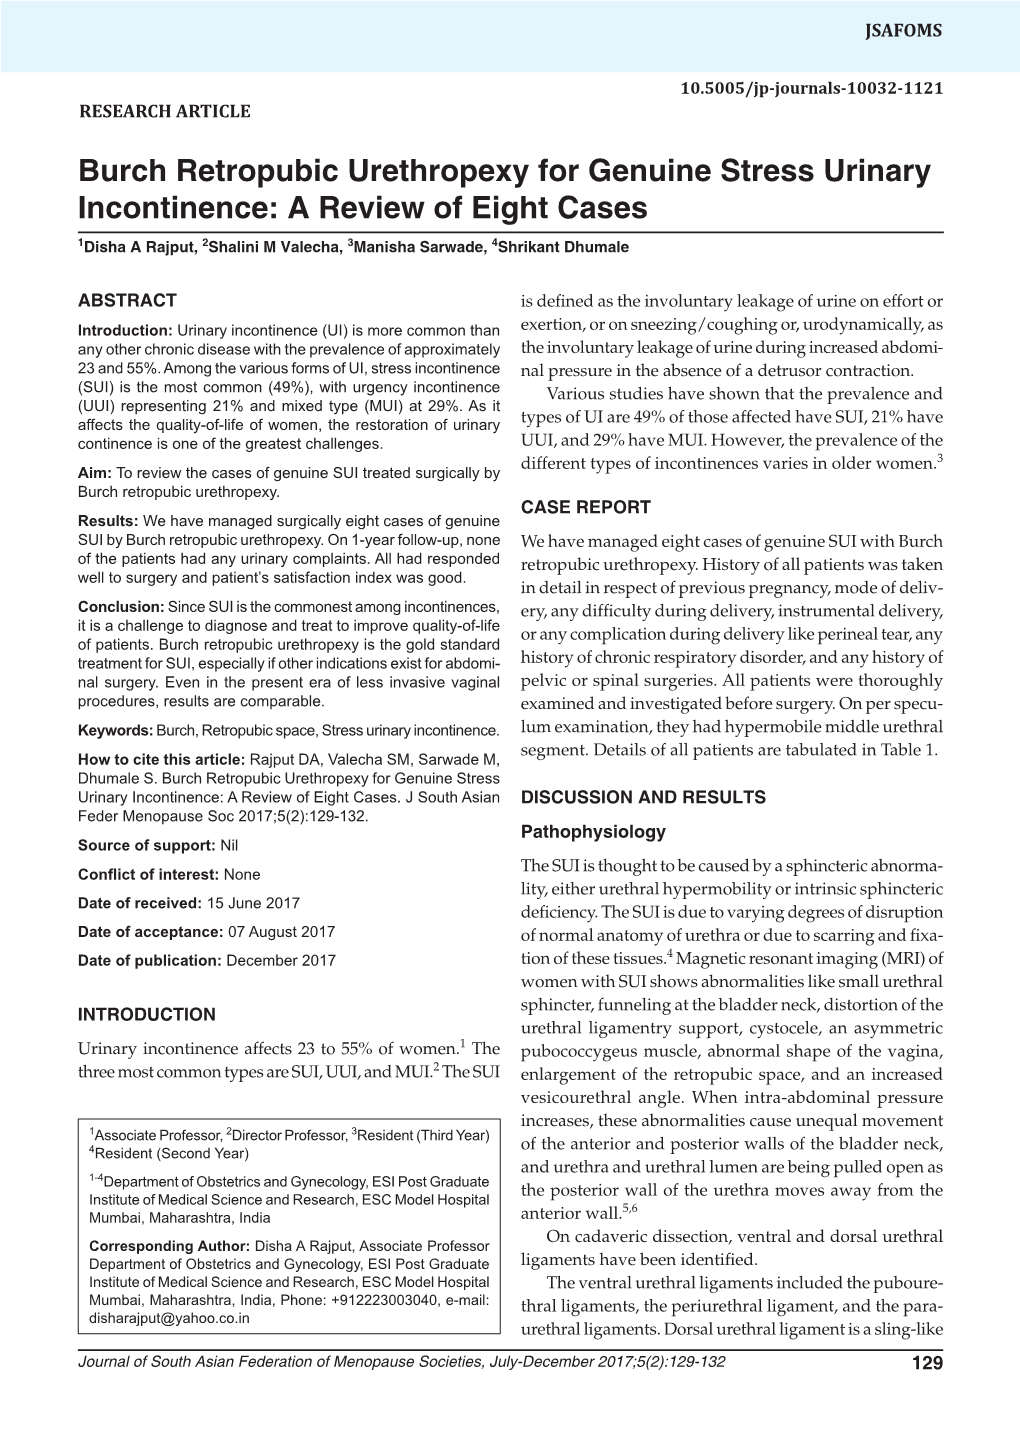 Burch Retropubic Urethropexy for Genuine Stress Urinary Incontinence: a Review of Eight Cases 1Disha a Rajput, 2Shalini M Valecha, 3Manisha Sarwade, 4Shrikant Dhumale